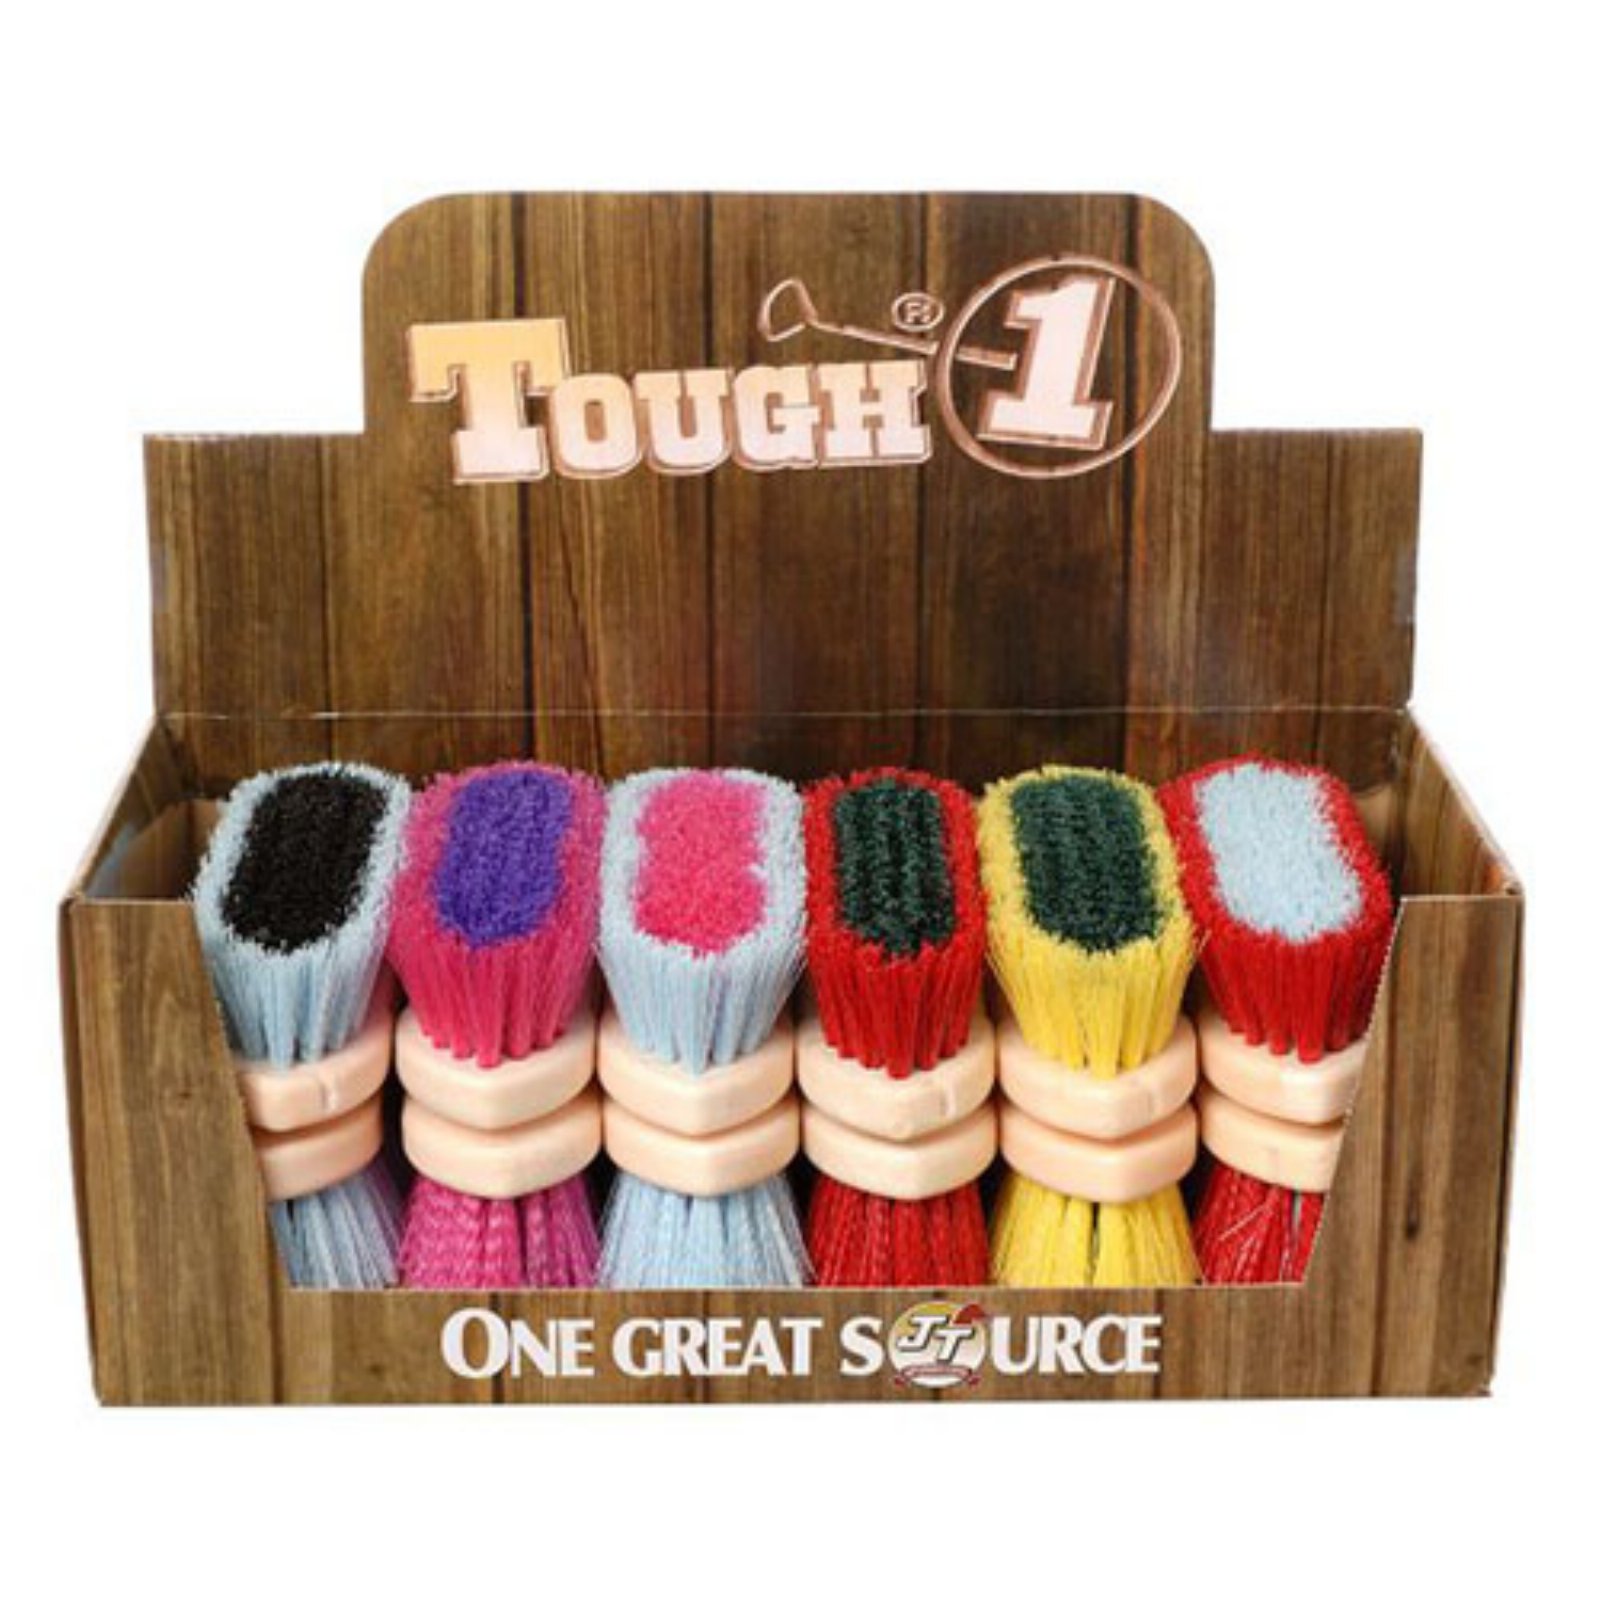 Tough-1 Medium Poly Bristle Brush - Bright Colors - 12 pk. Assorted - image 1 of 1